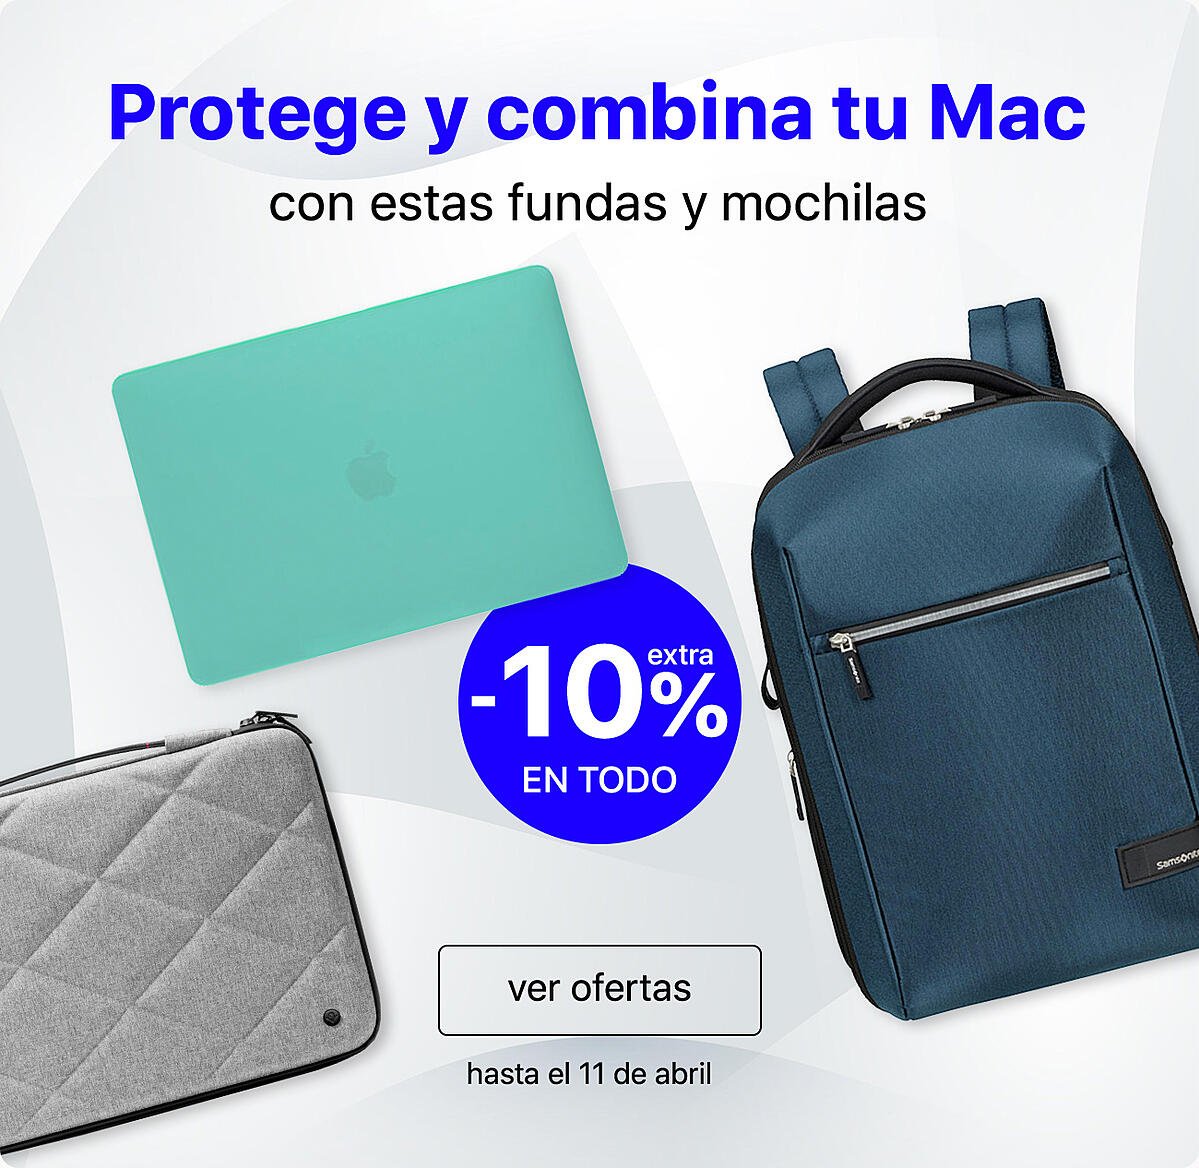 Proteccion-Mac